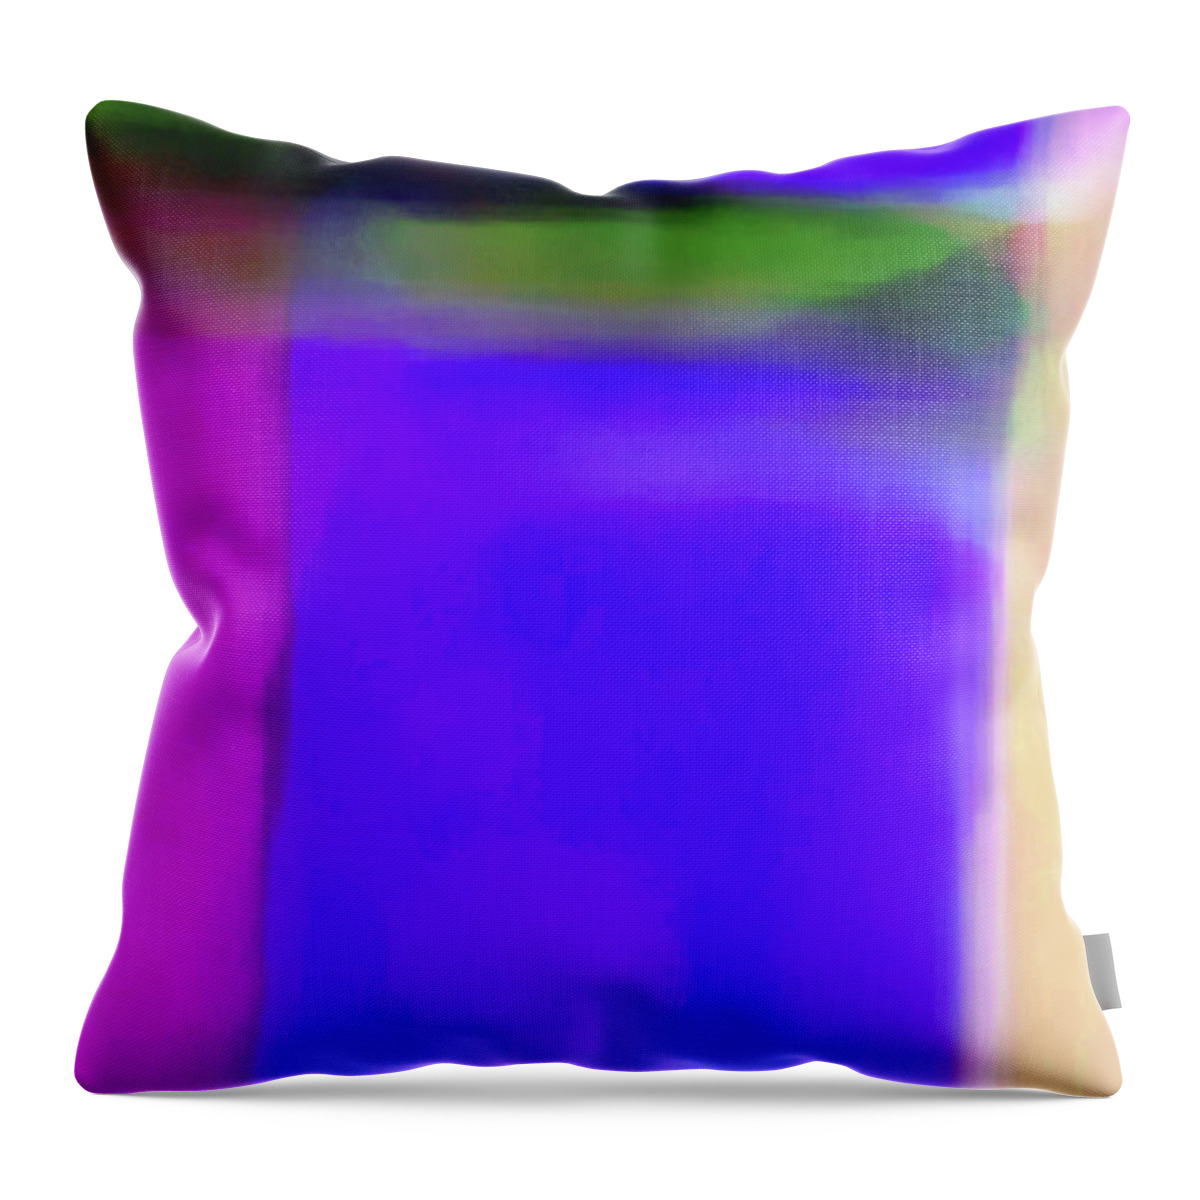 Walter Paul Bebirian Throw Pillow featuring the digital art 9-4-2015gabcdefghijklmn by Walter Paul Bebirian